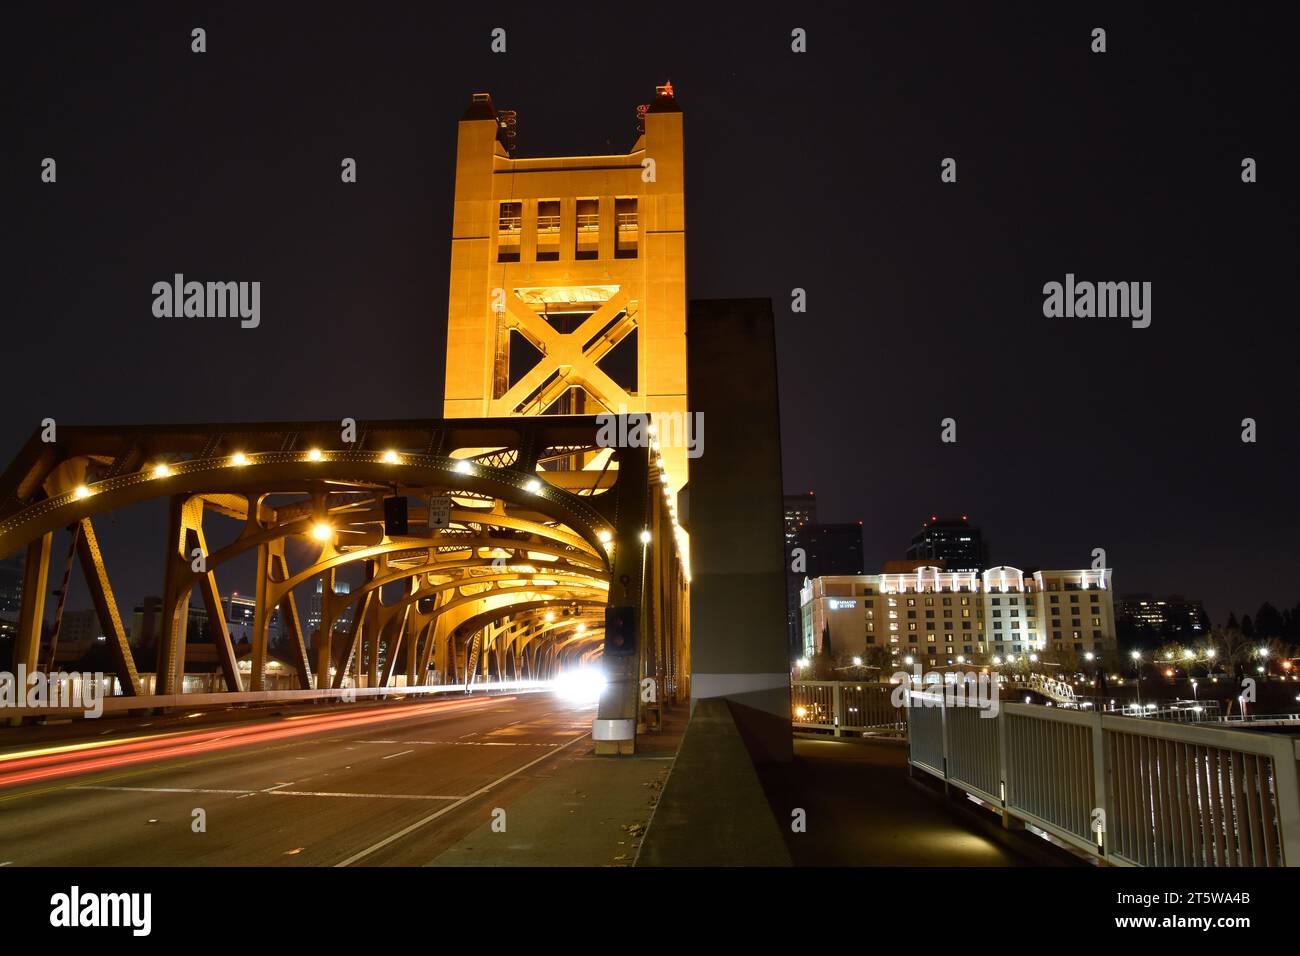 A bridge illuminated by street lights at night Stock Photo